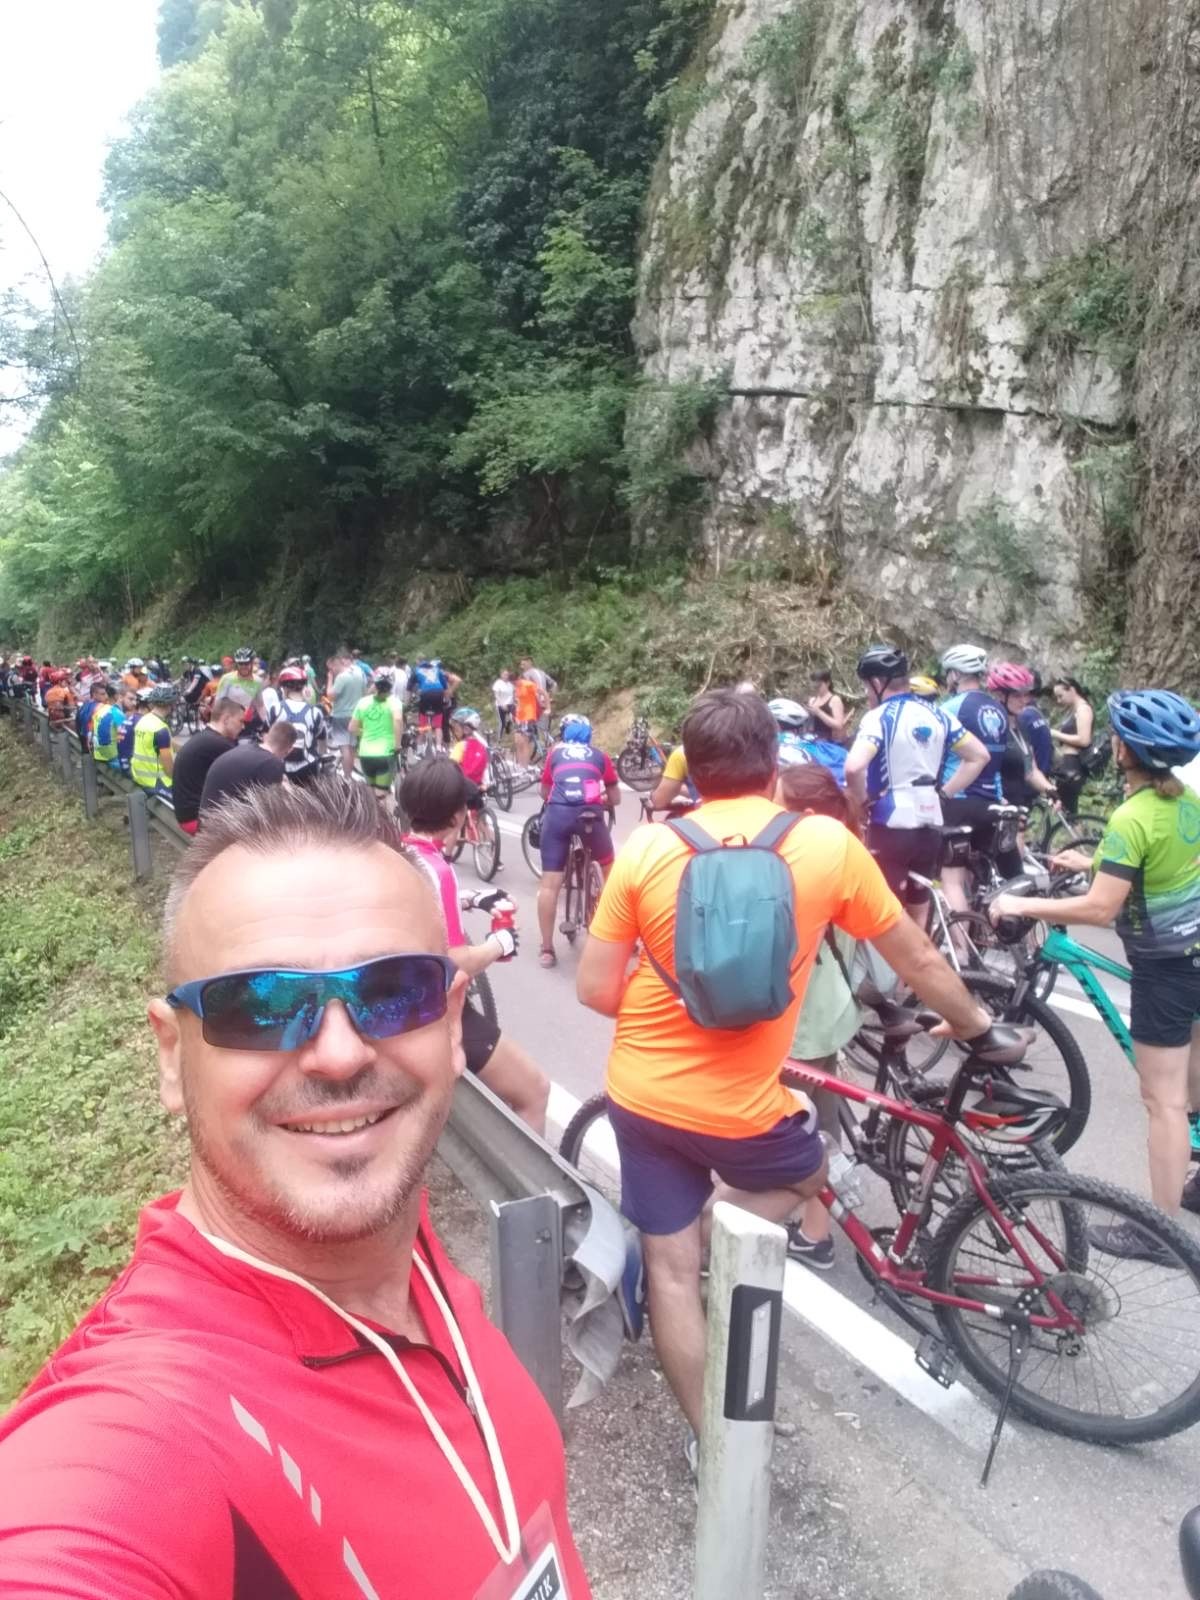 Cycling to Bihać, stopping at Sokolac Fortress, continuing cycling to Japod Islands